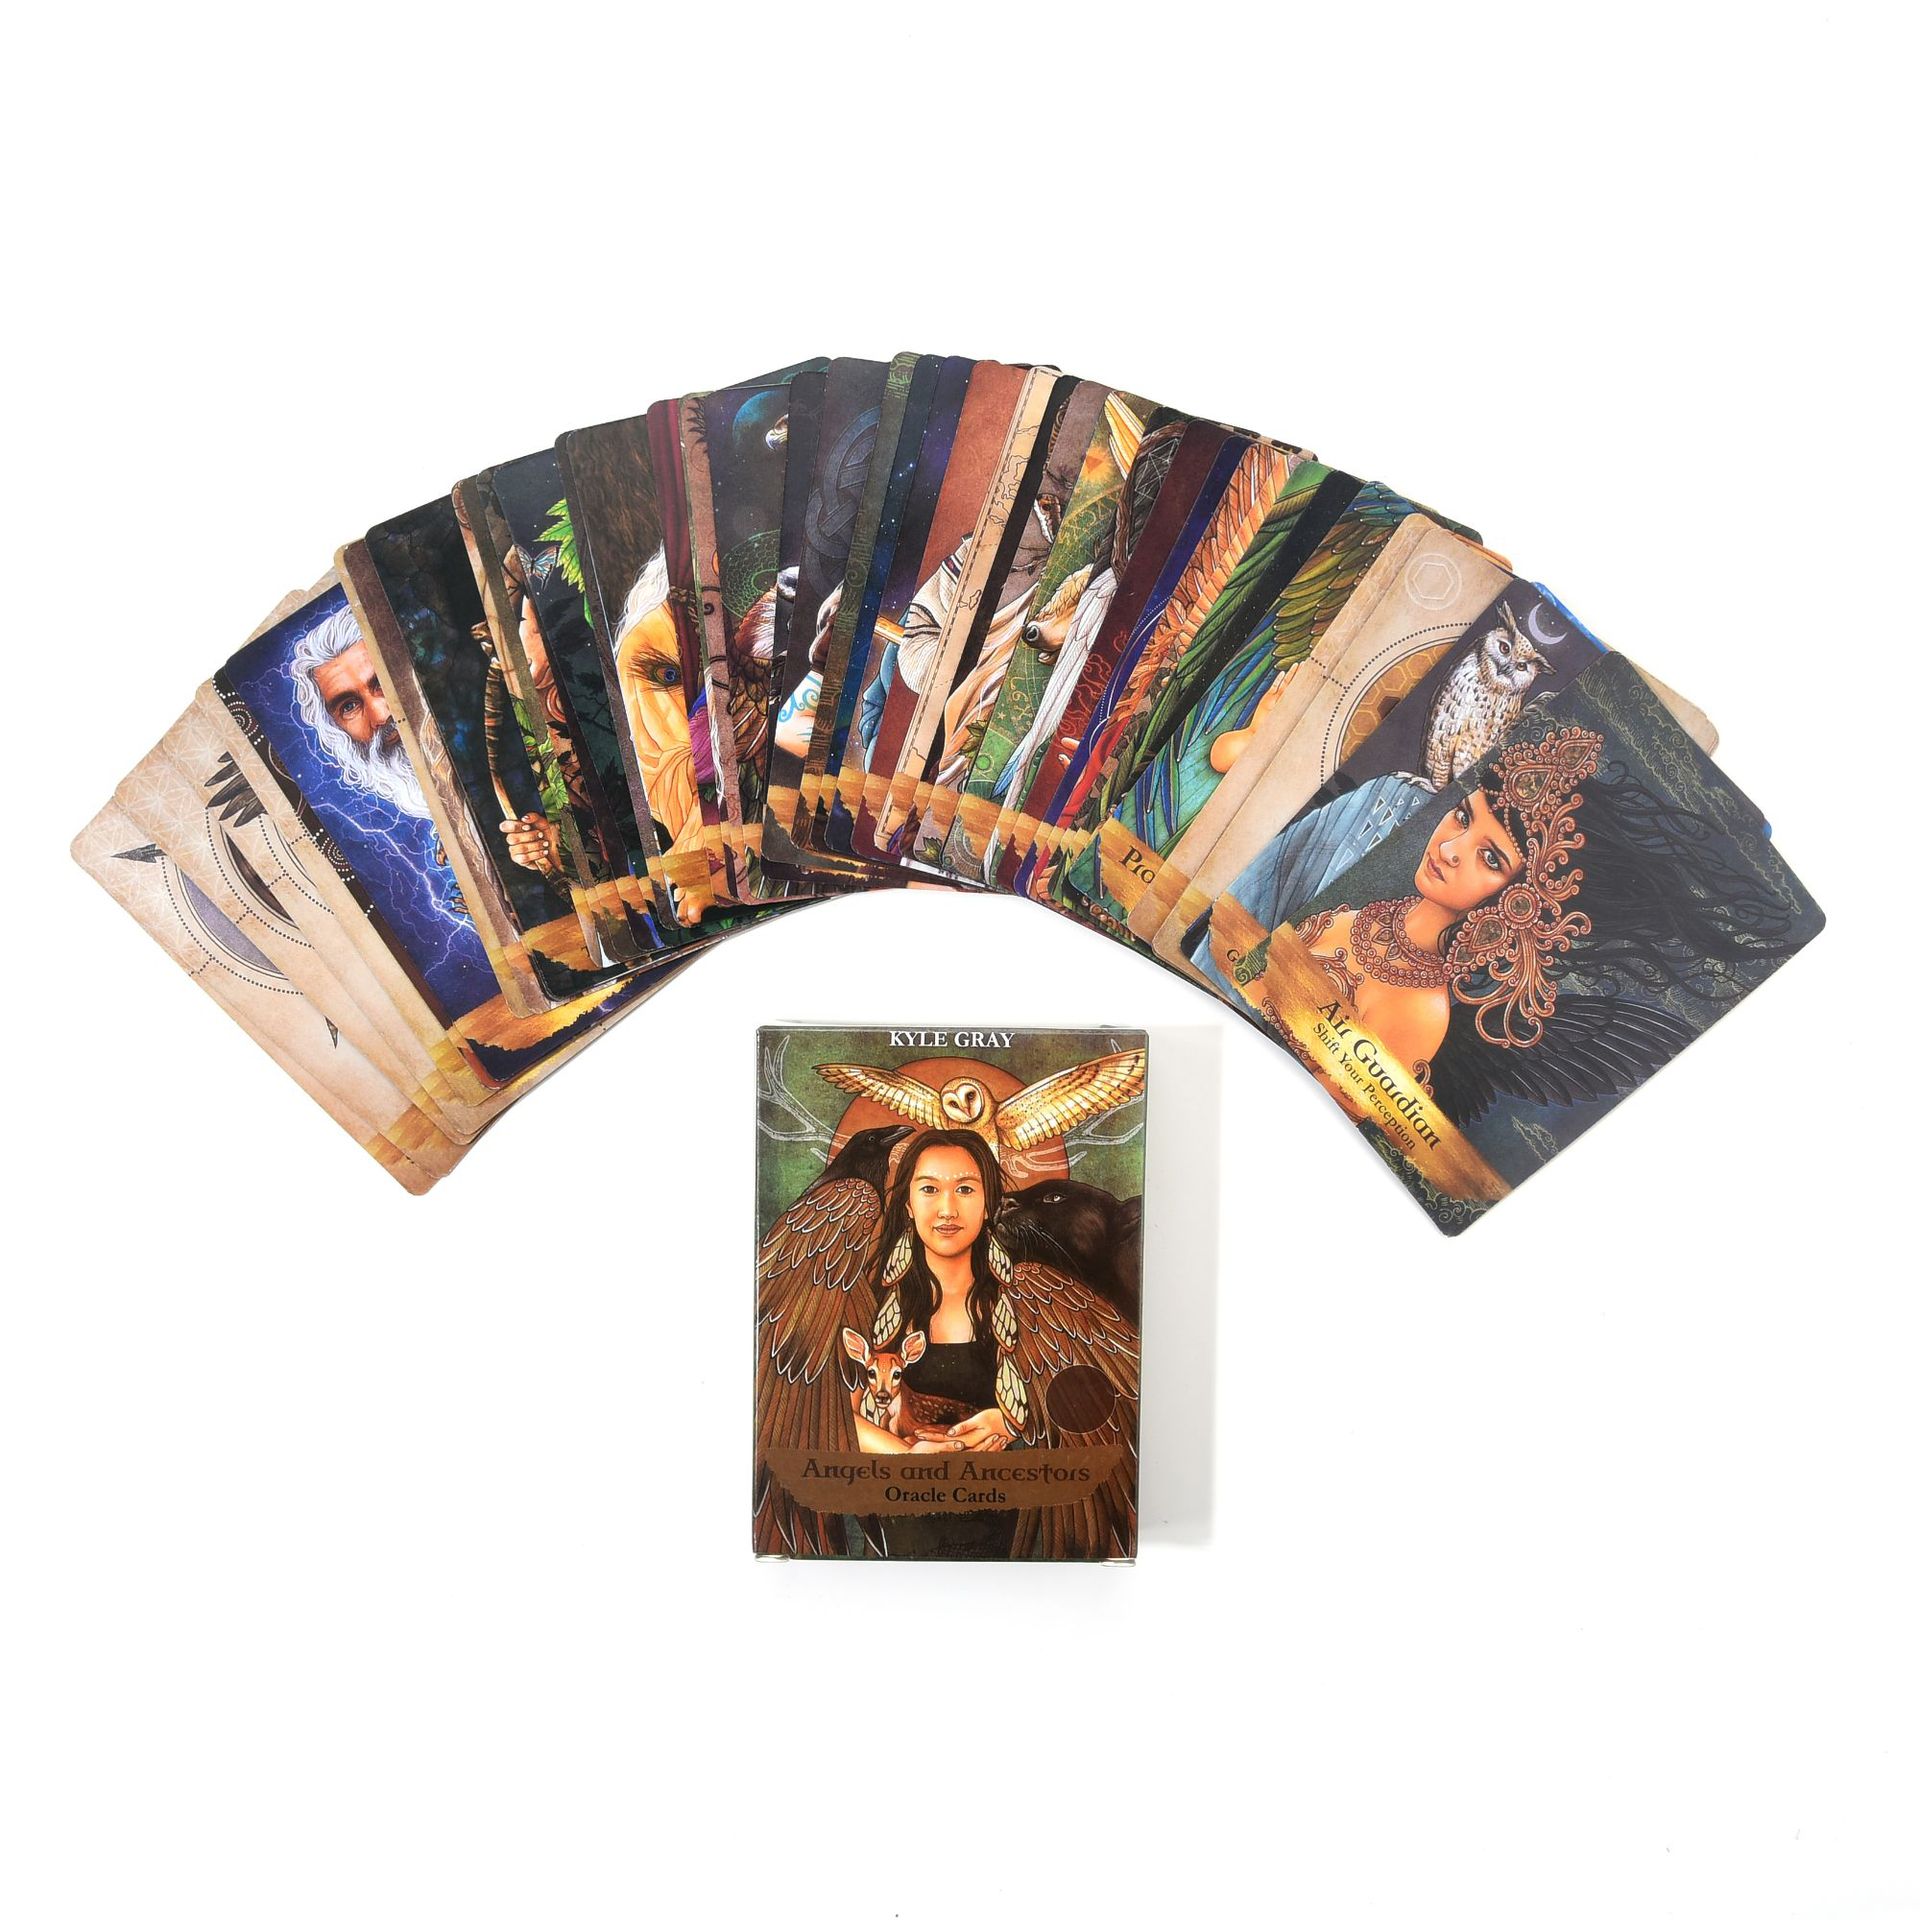 Bộ Bài Bói Tarot  Angels and Ancestors Oracle Cards Cao Cấp